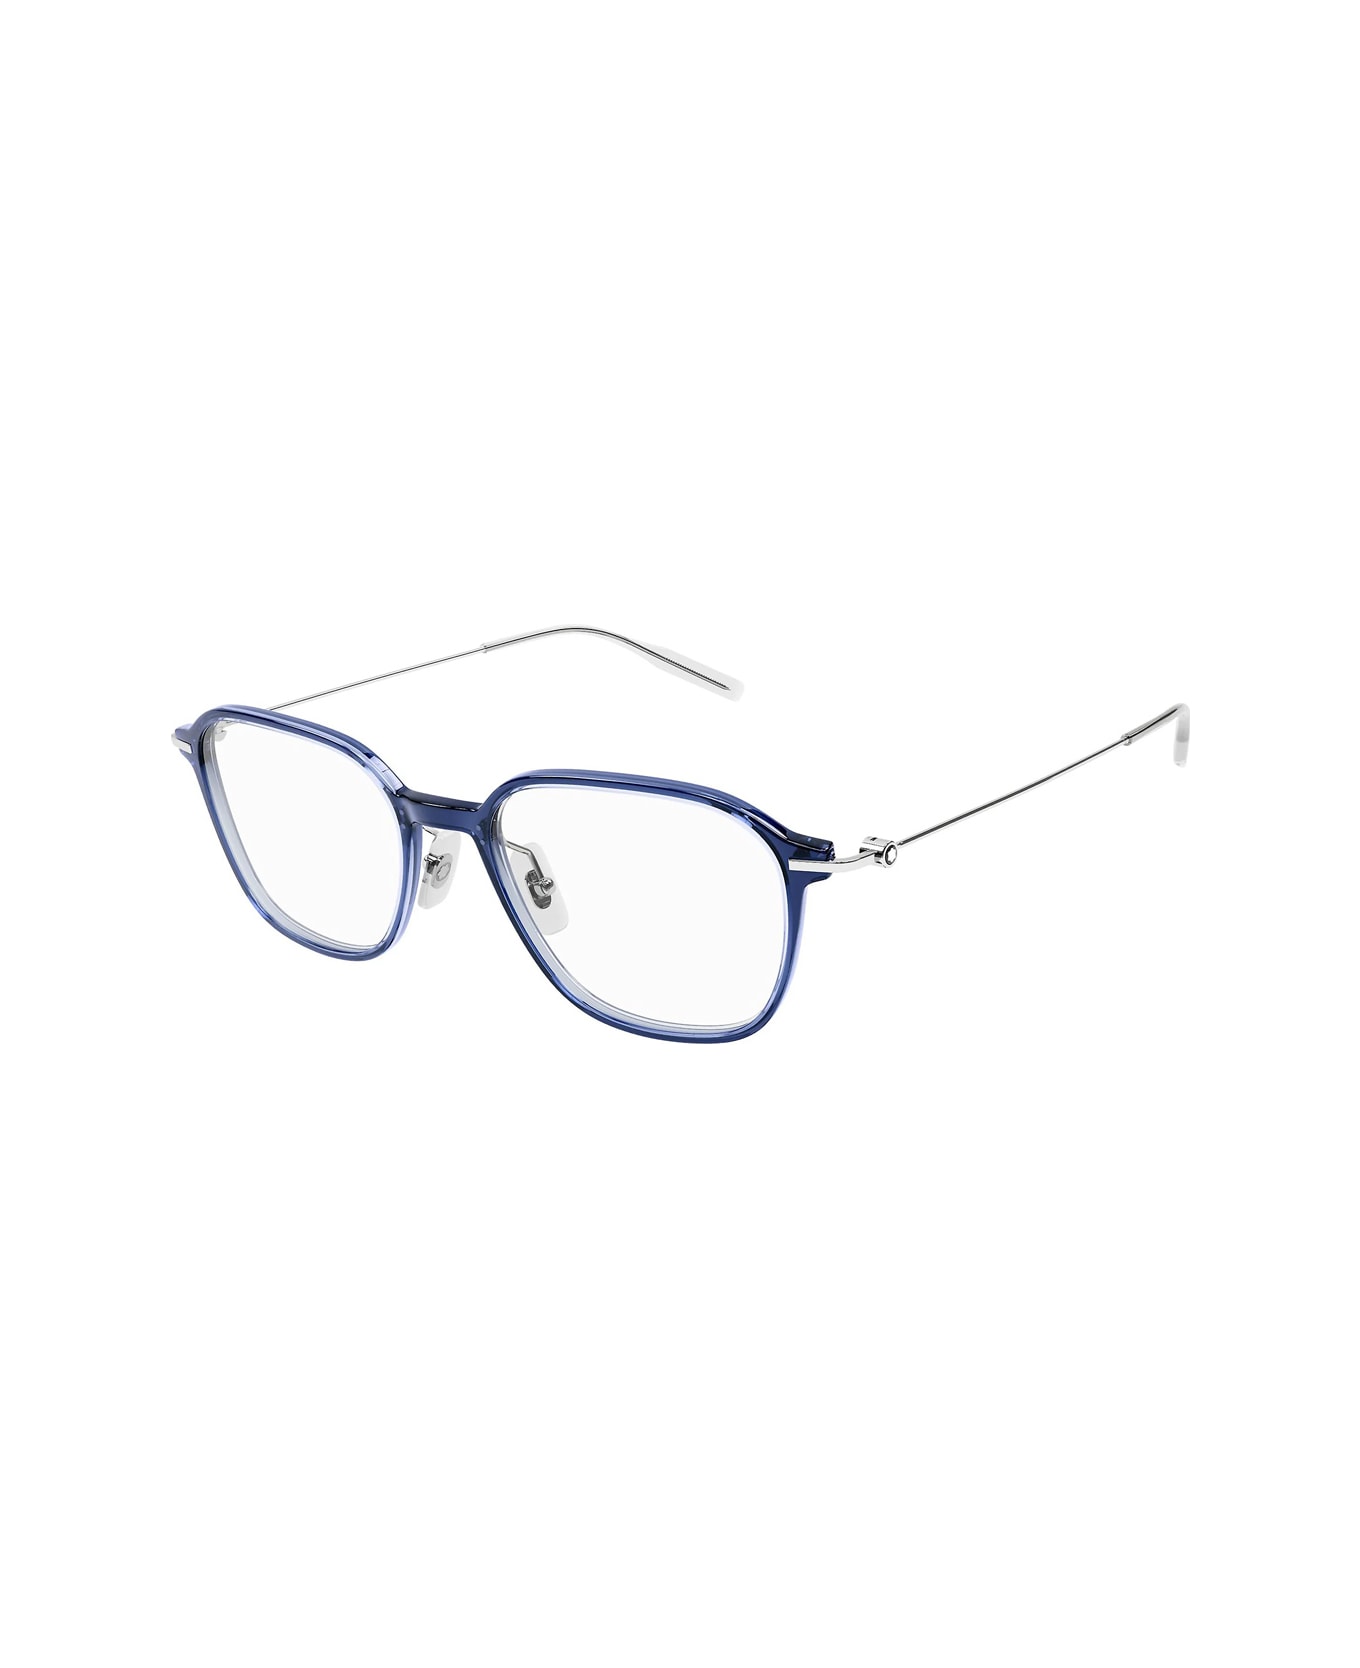 Montblanc Mb0207o Linea Established 003 Glasses - Blu アイウェア